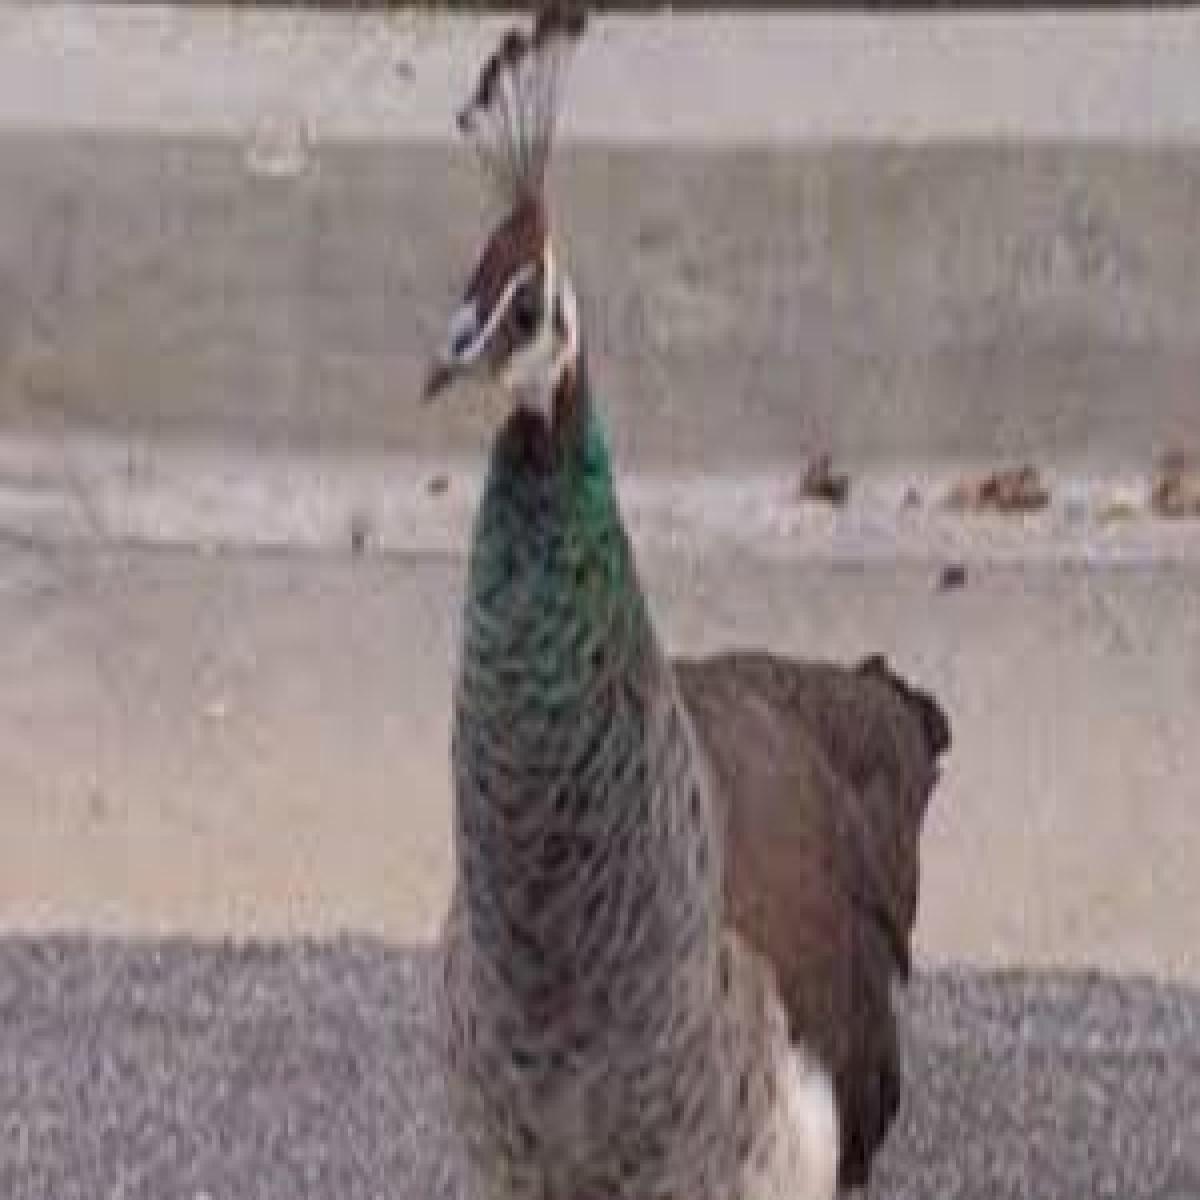 Shepherd rescues hurt peacock